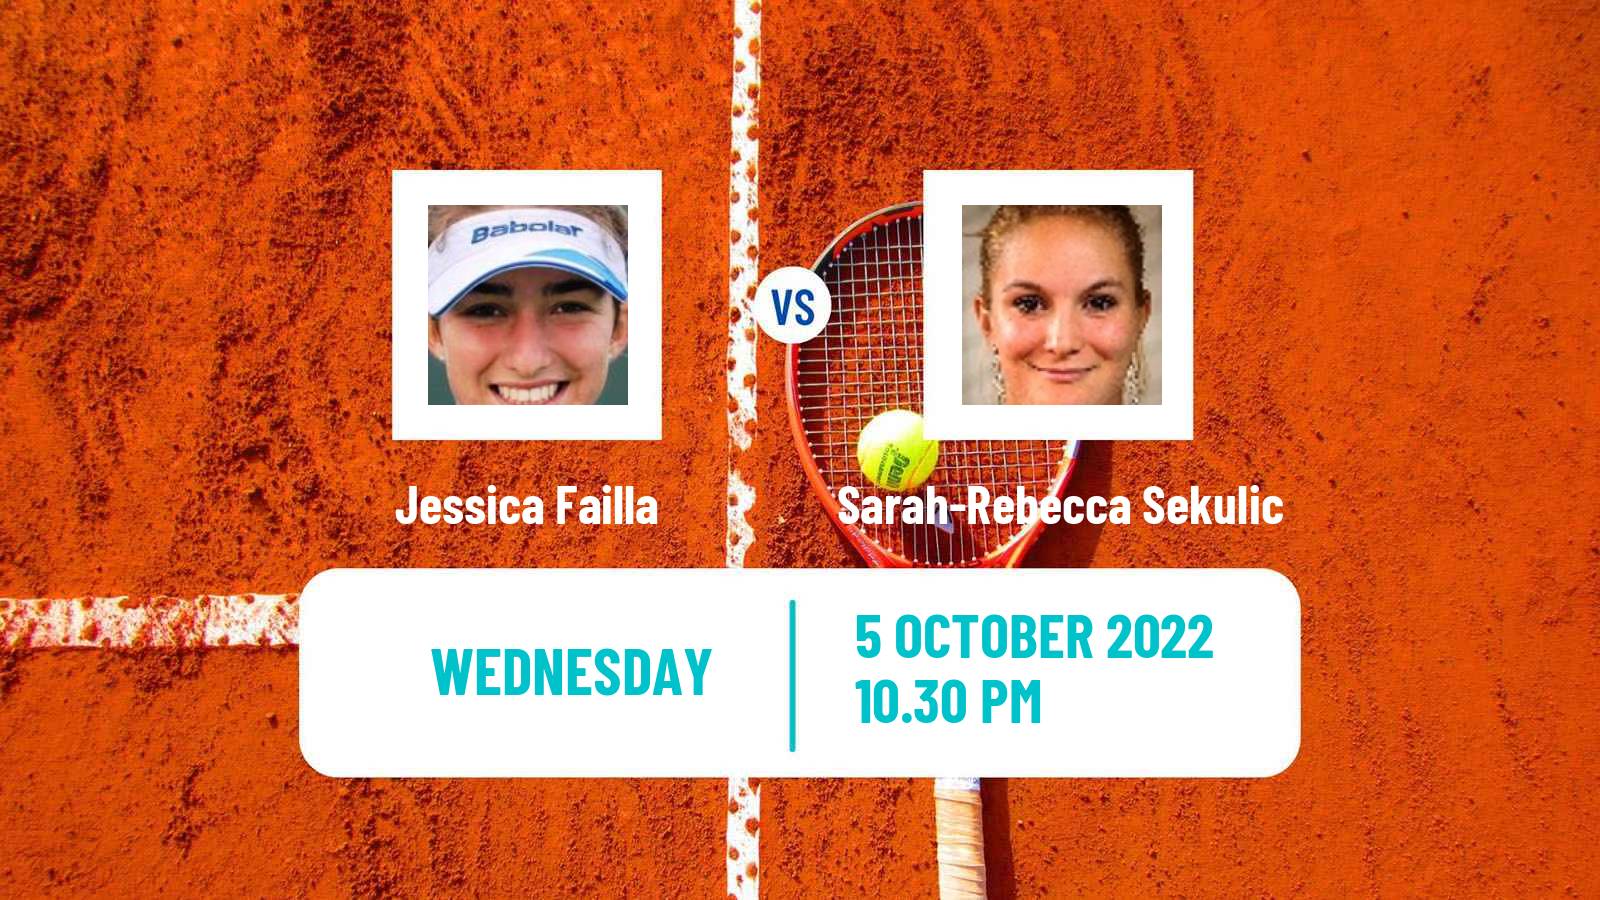 Tennis ITF Tournaments Jessica Failla - Sarah-Rebecca Sekulic